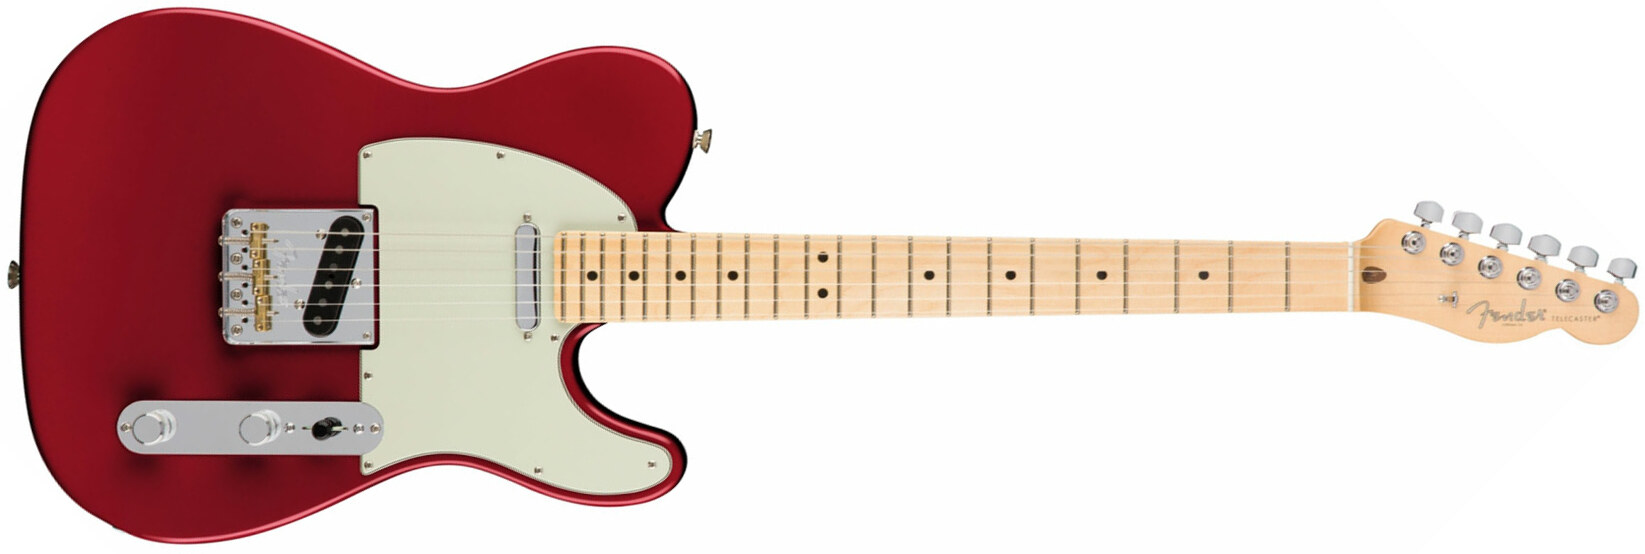 Fender Tele American Professional 2s Usa Mn - Candy Apple Red - Televorm elektrische gitaar - Main picture